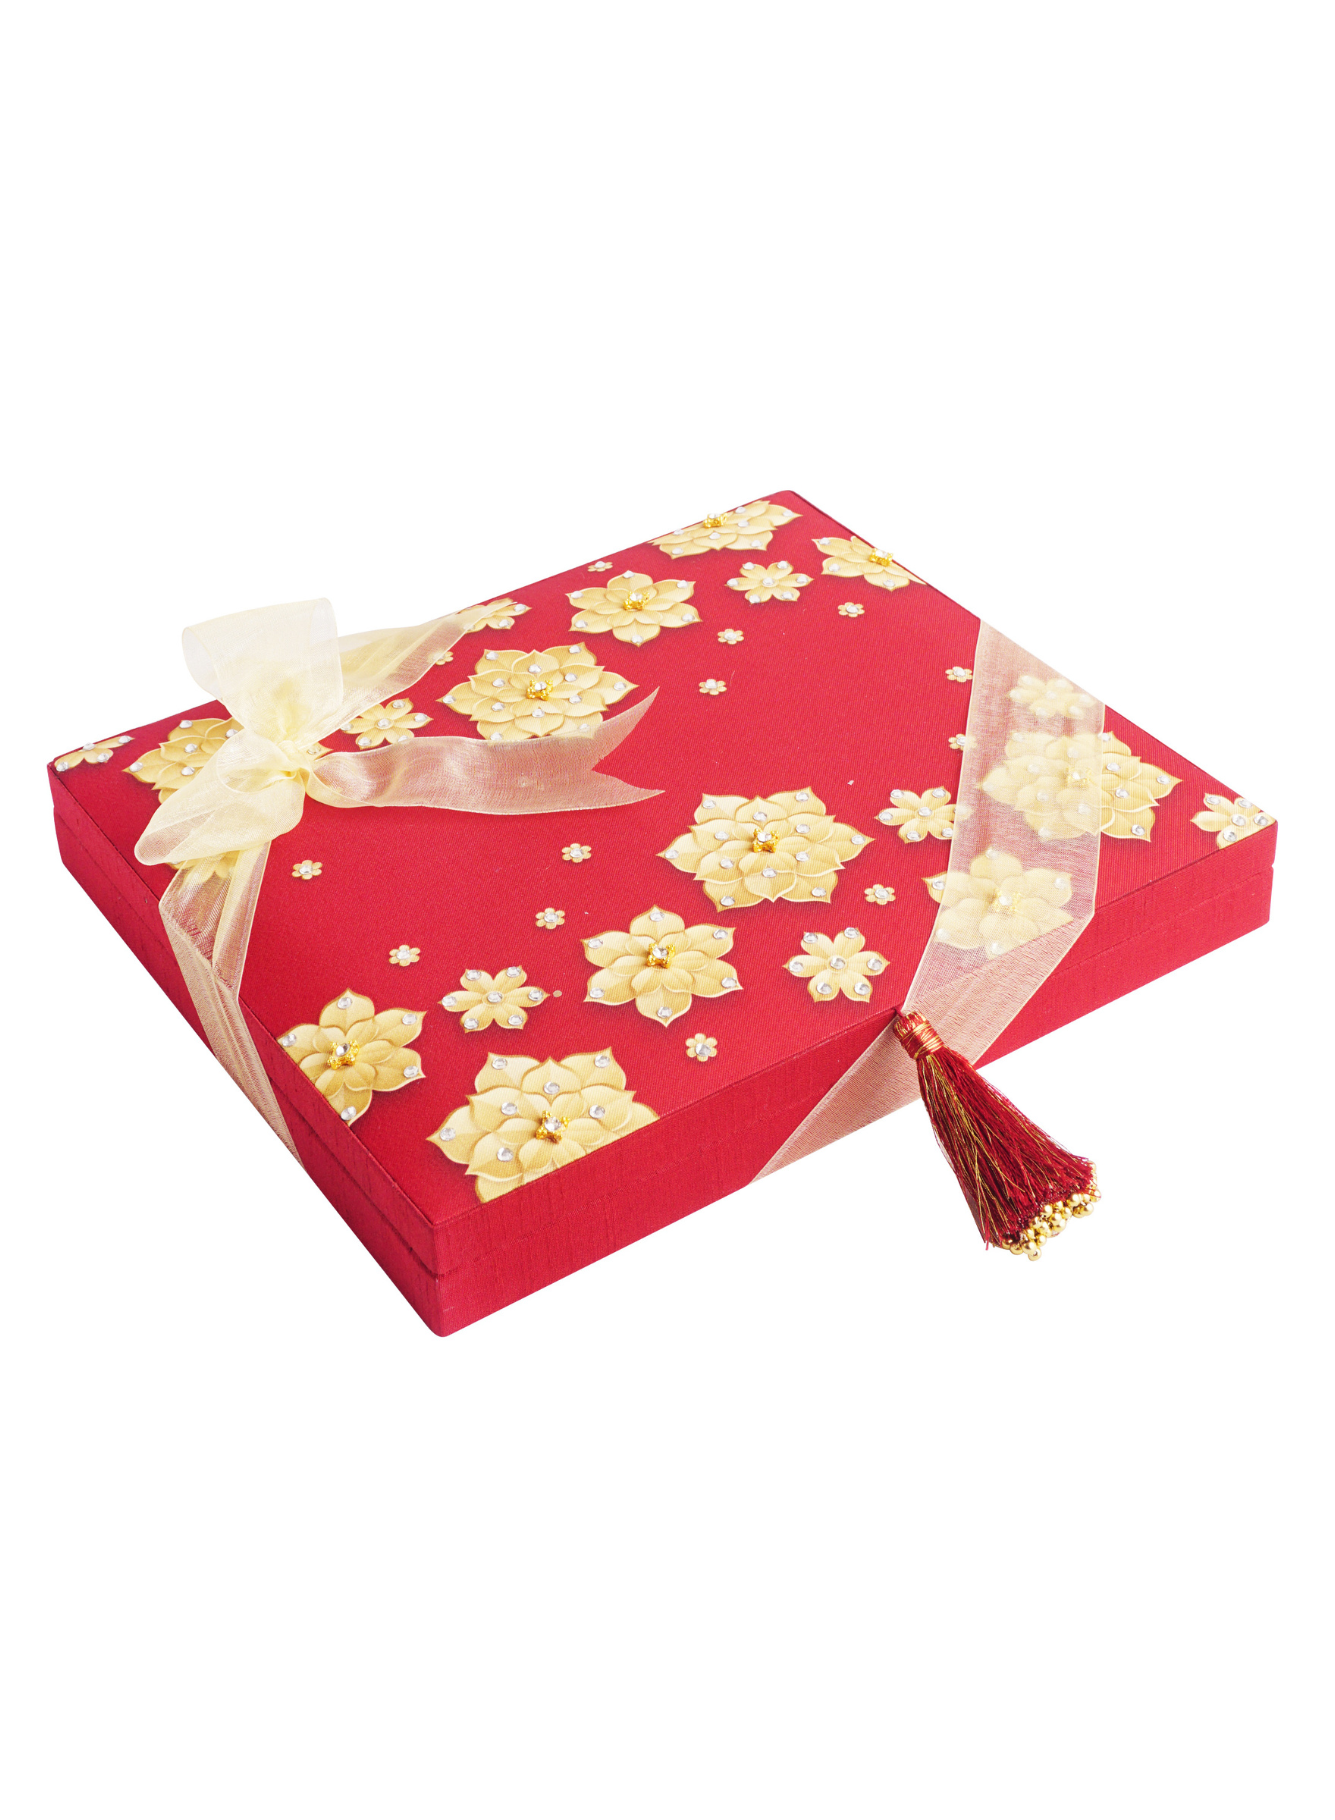 Safawi Dates with Burgundy & Gold Festive Silk Box (32 Pcs)